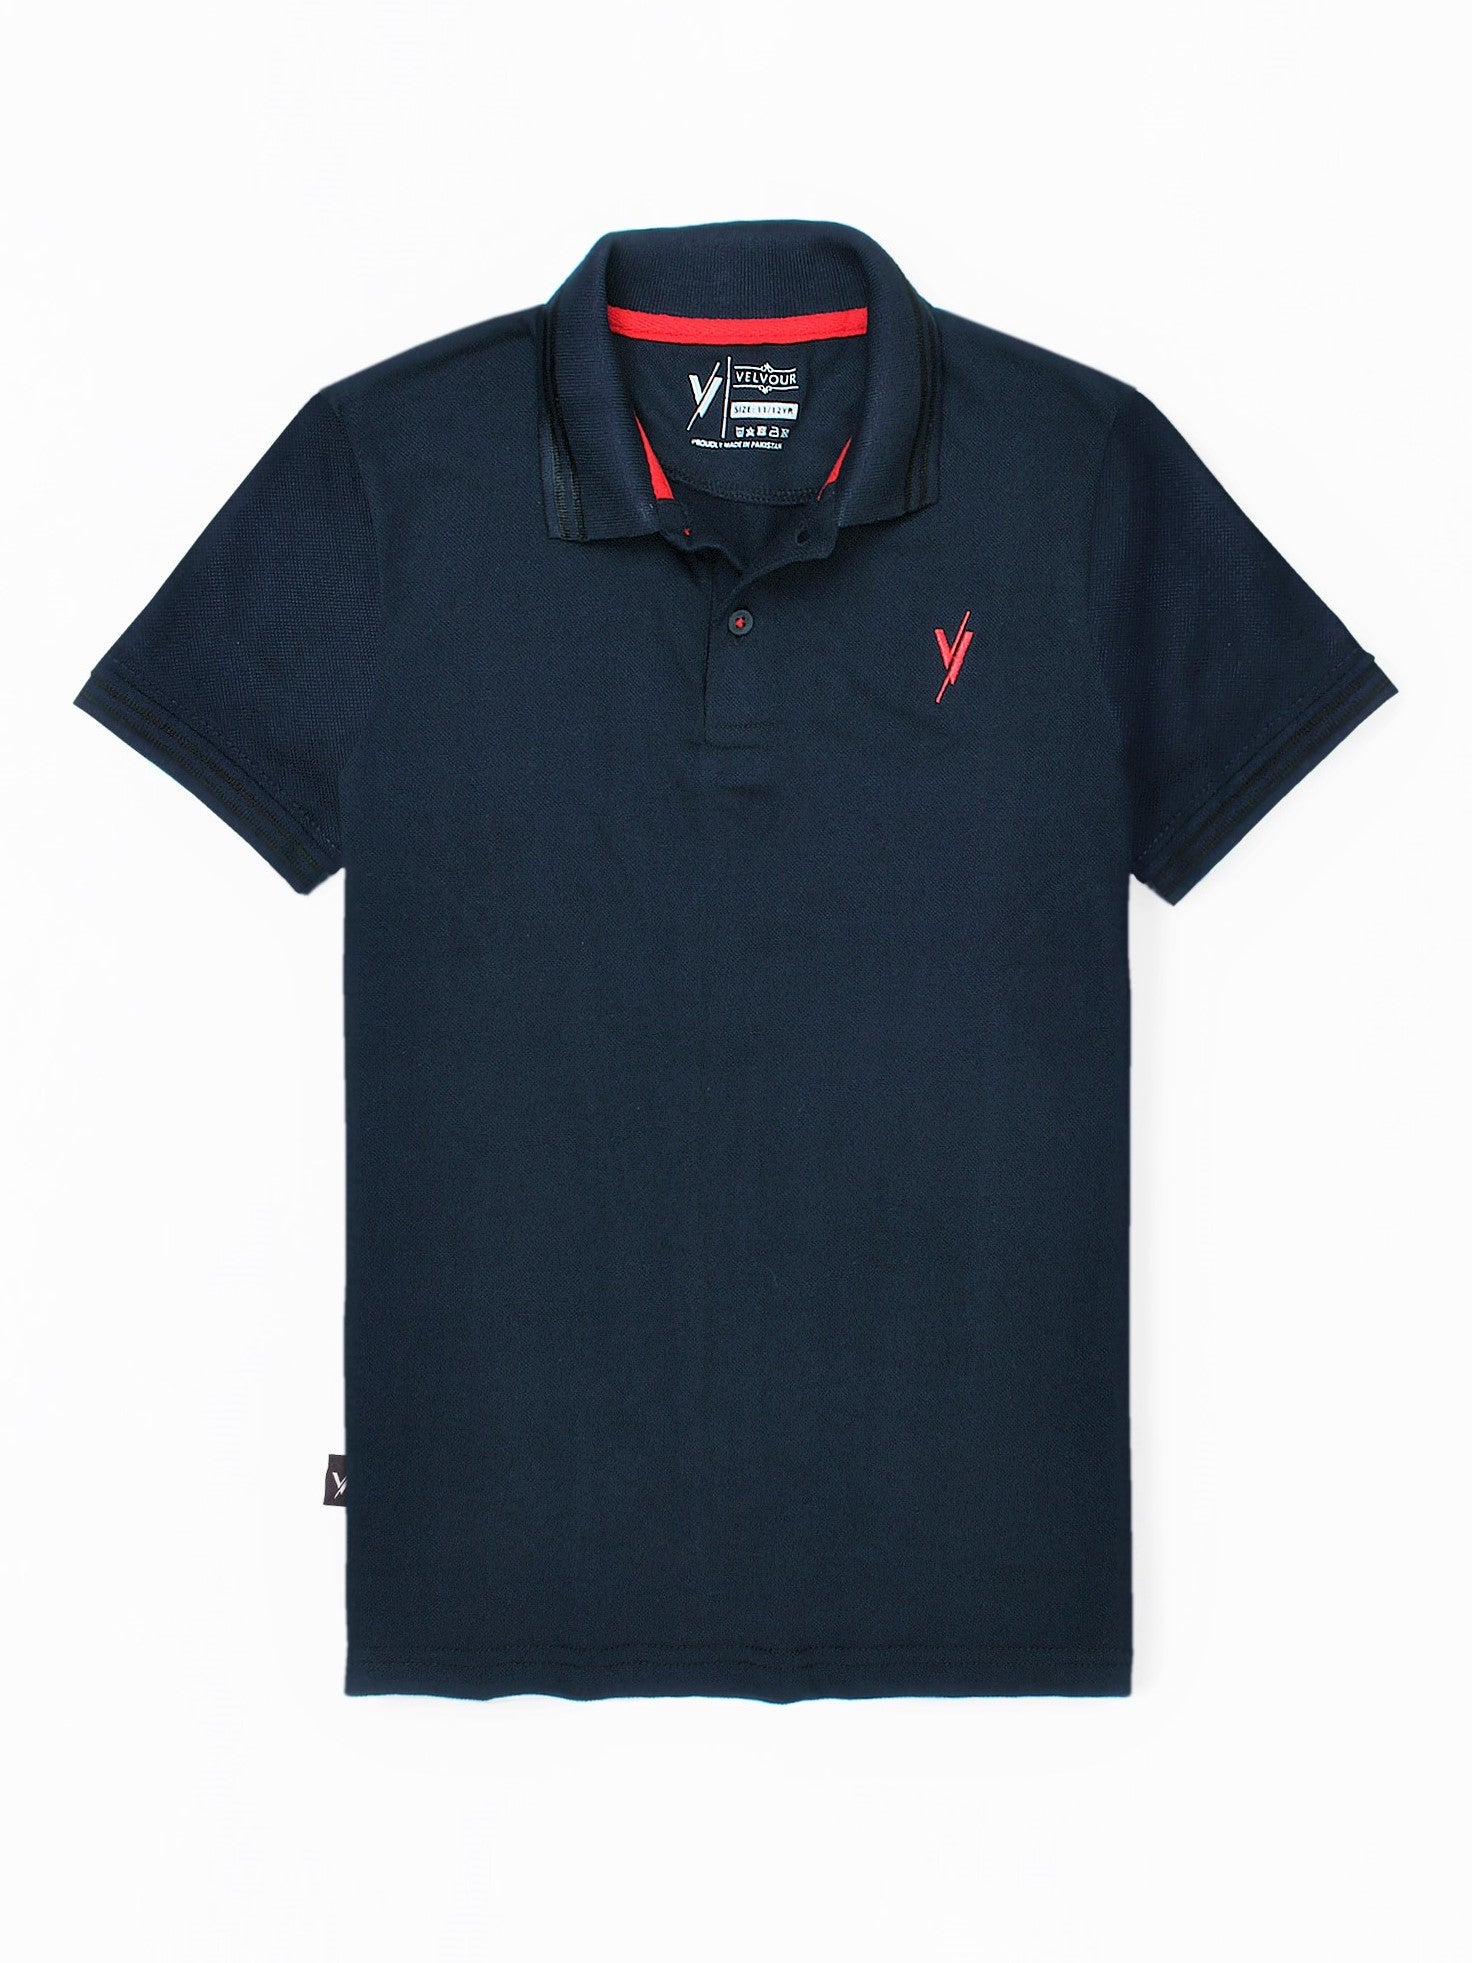 Tipping Collar Polo Shirt For Boys plain Navy Blue